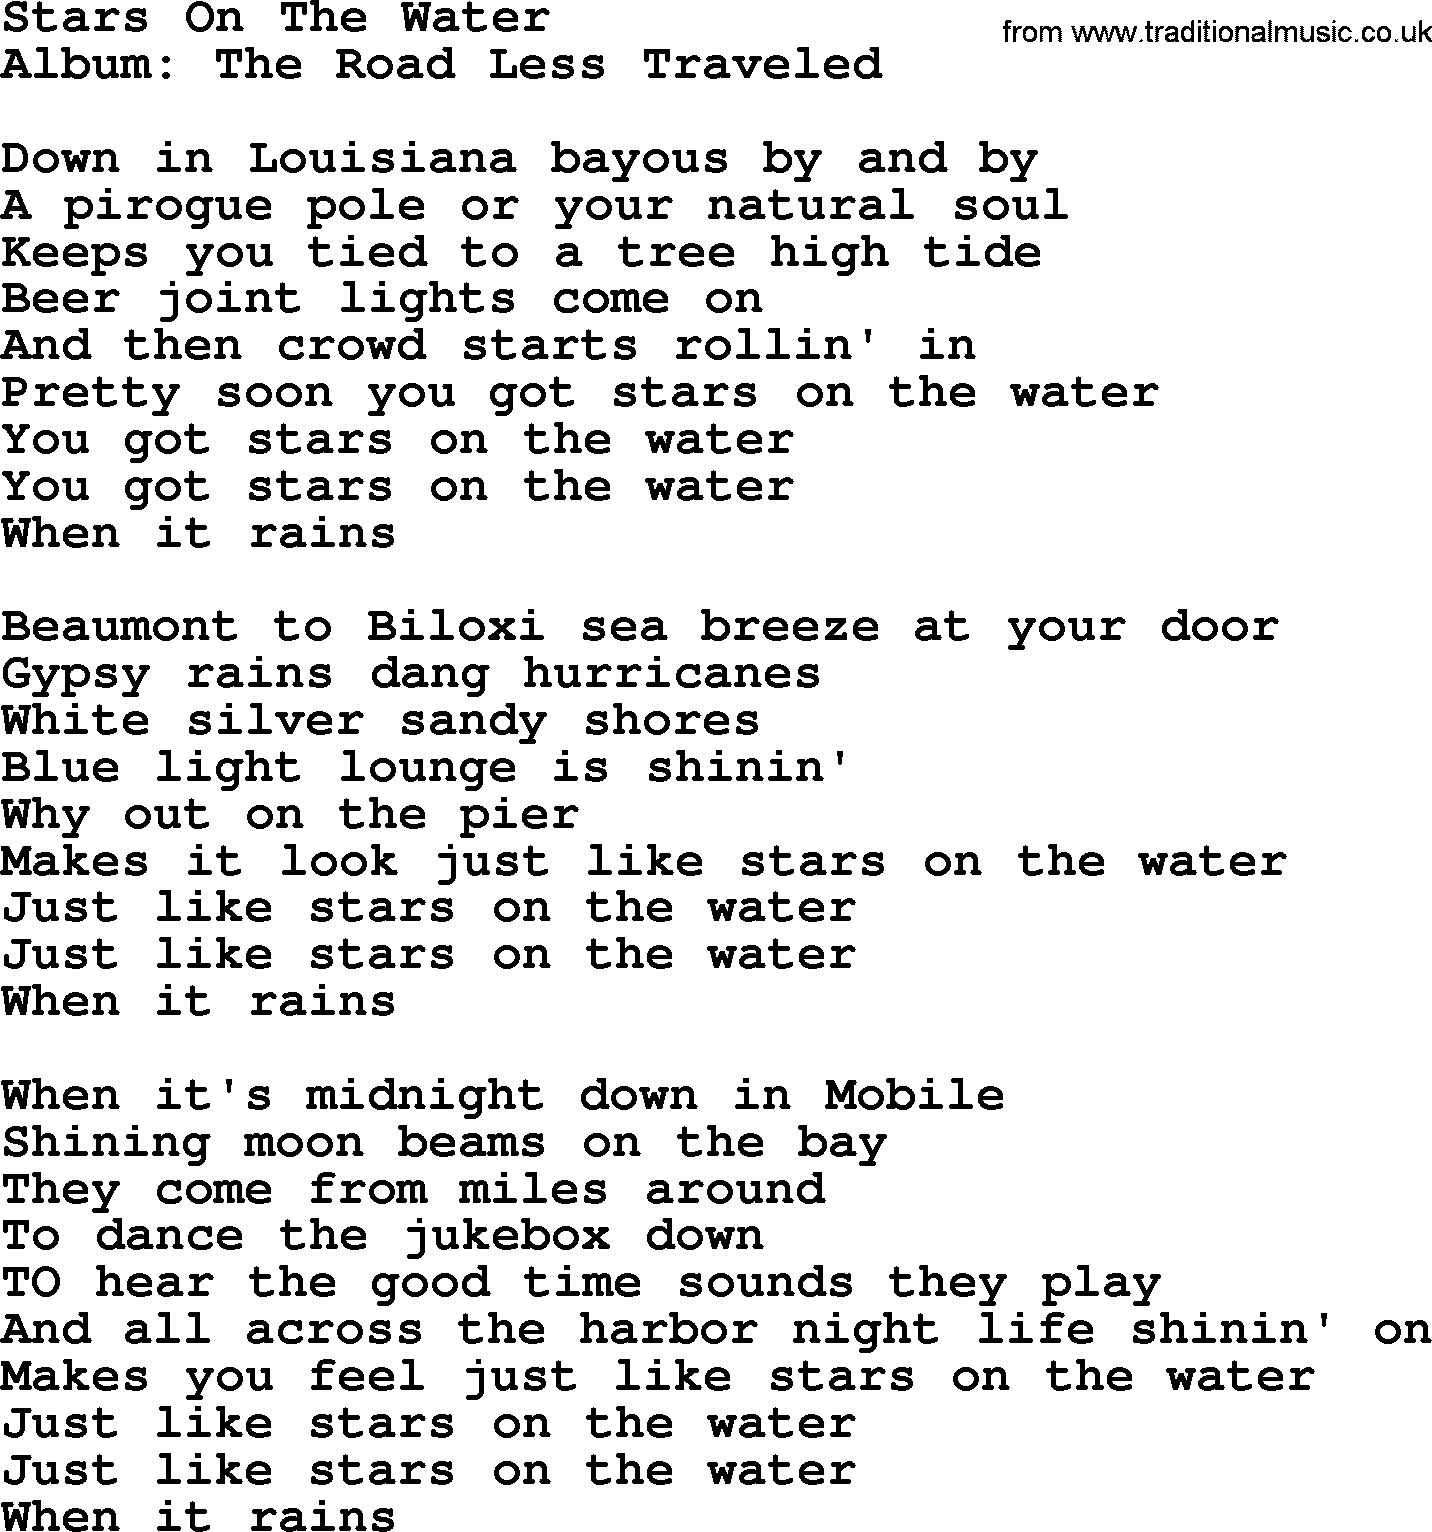 George Strait song: Stars On The Water, lyrics